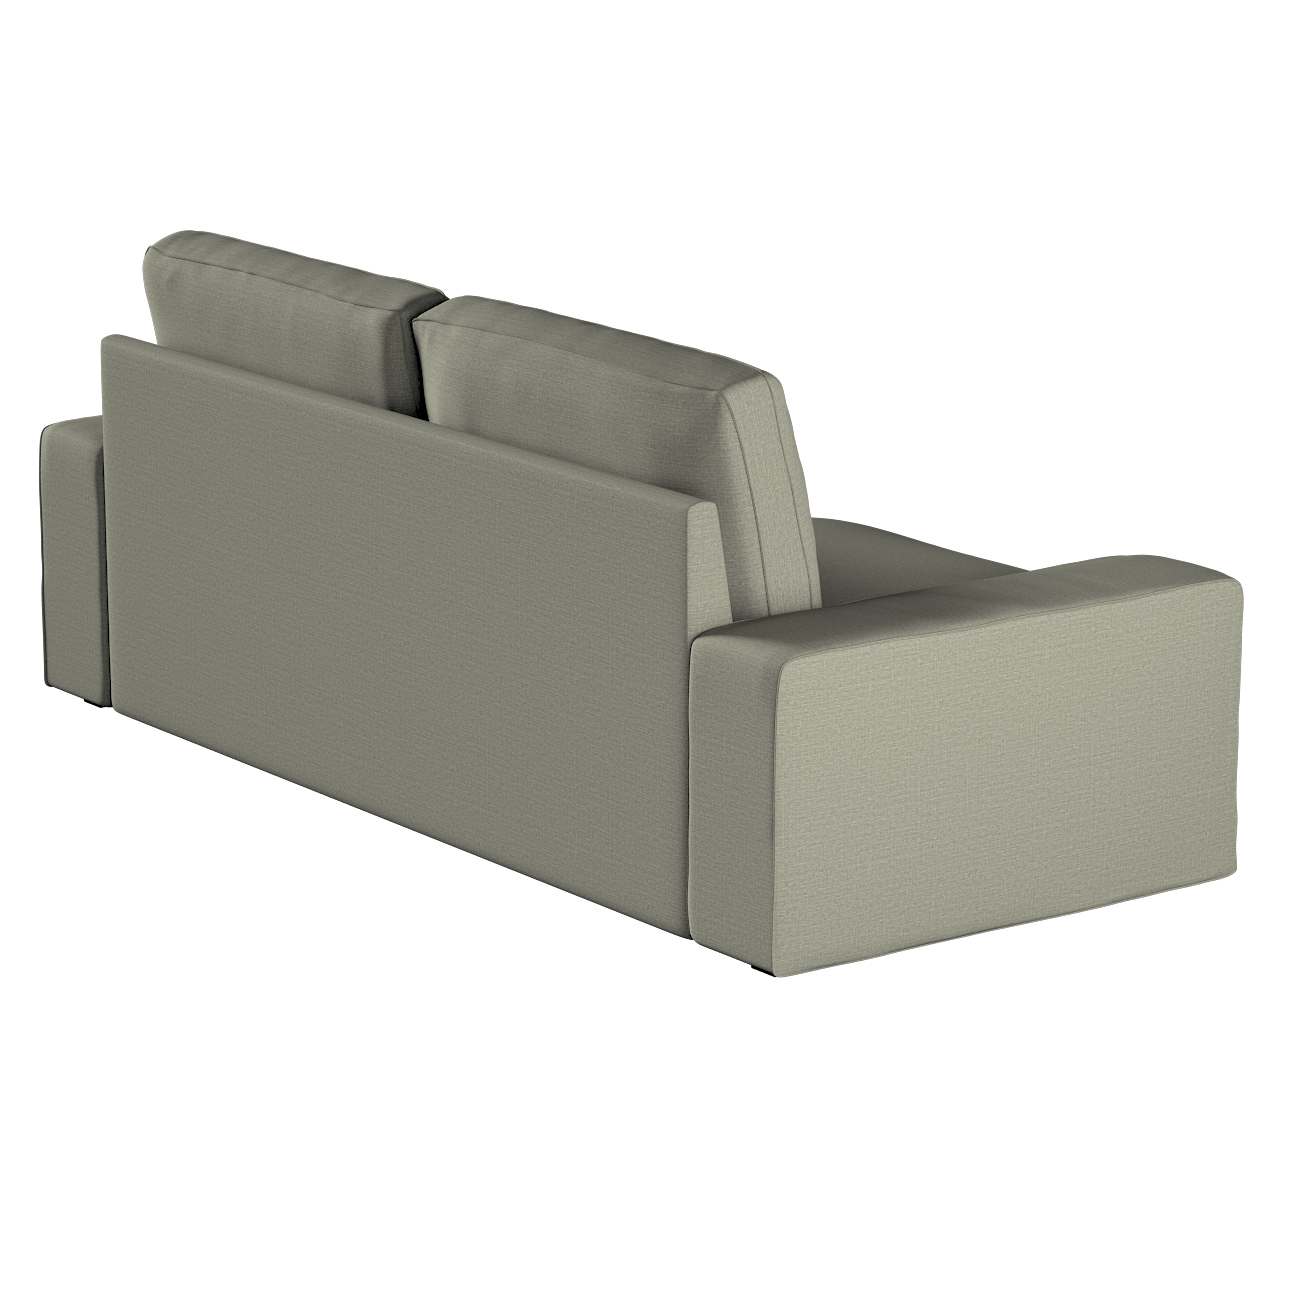 Bezug für Kivik 3-Sitzer Sofa, grau-beige, Bezug für Sofa Kivik 3-Sitzer, L günstig online kaufen